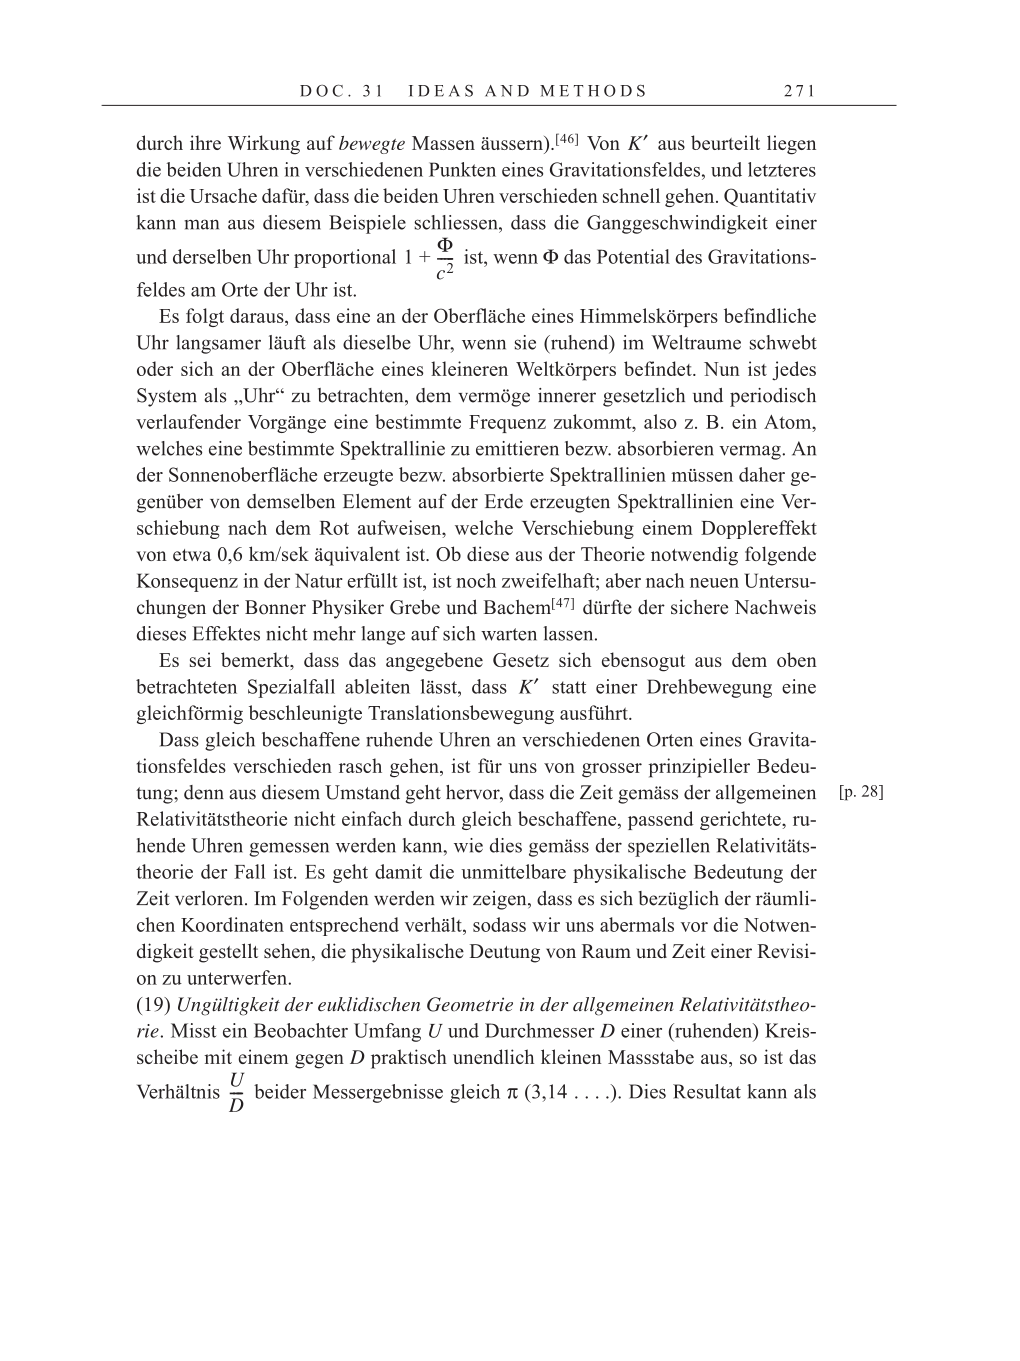 Volume 7: The Berlin Years: Writings, 1918-1921 page 271